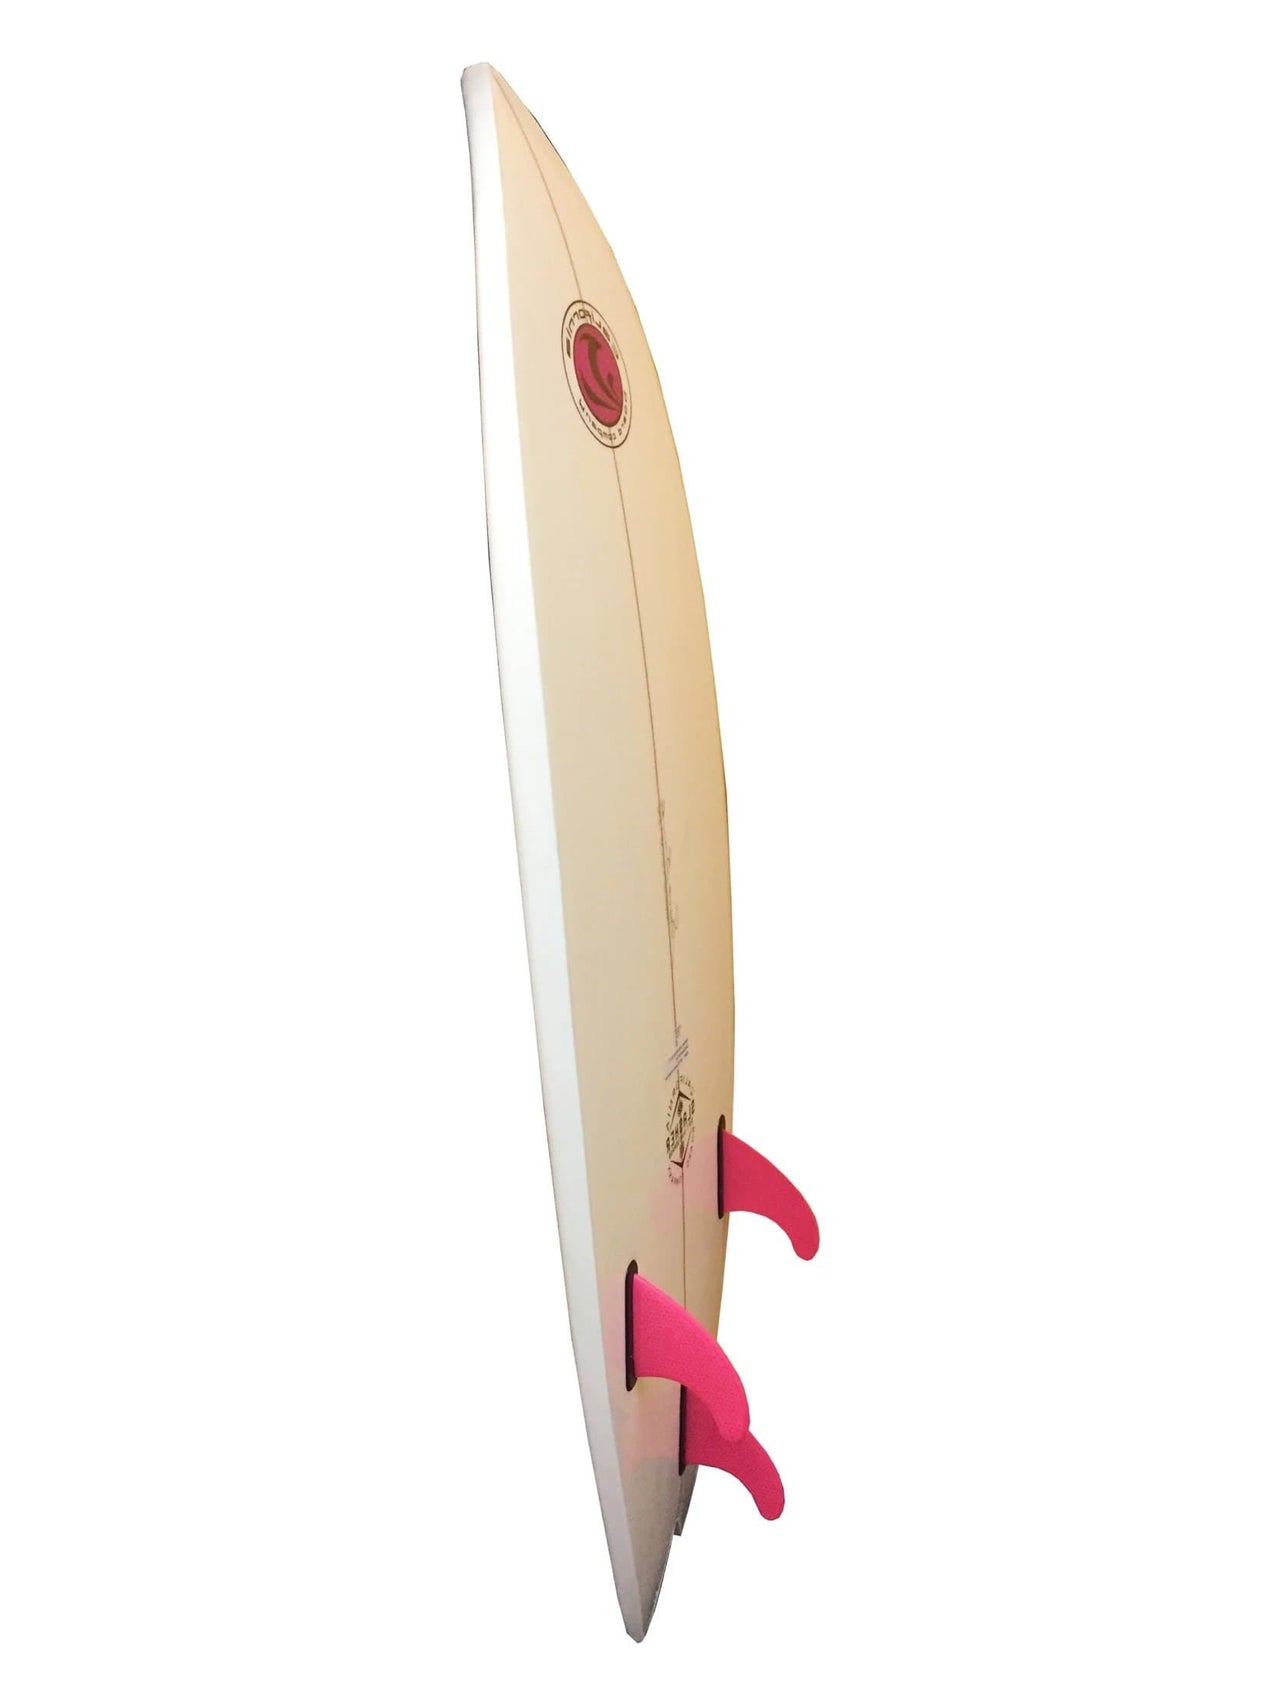 5'2" CBC Slasher Foam Fish Surfboard 4